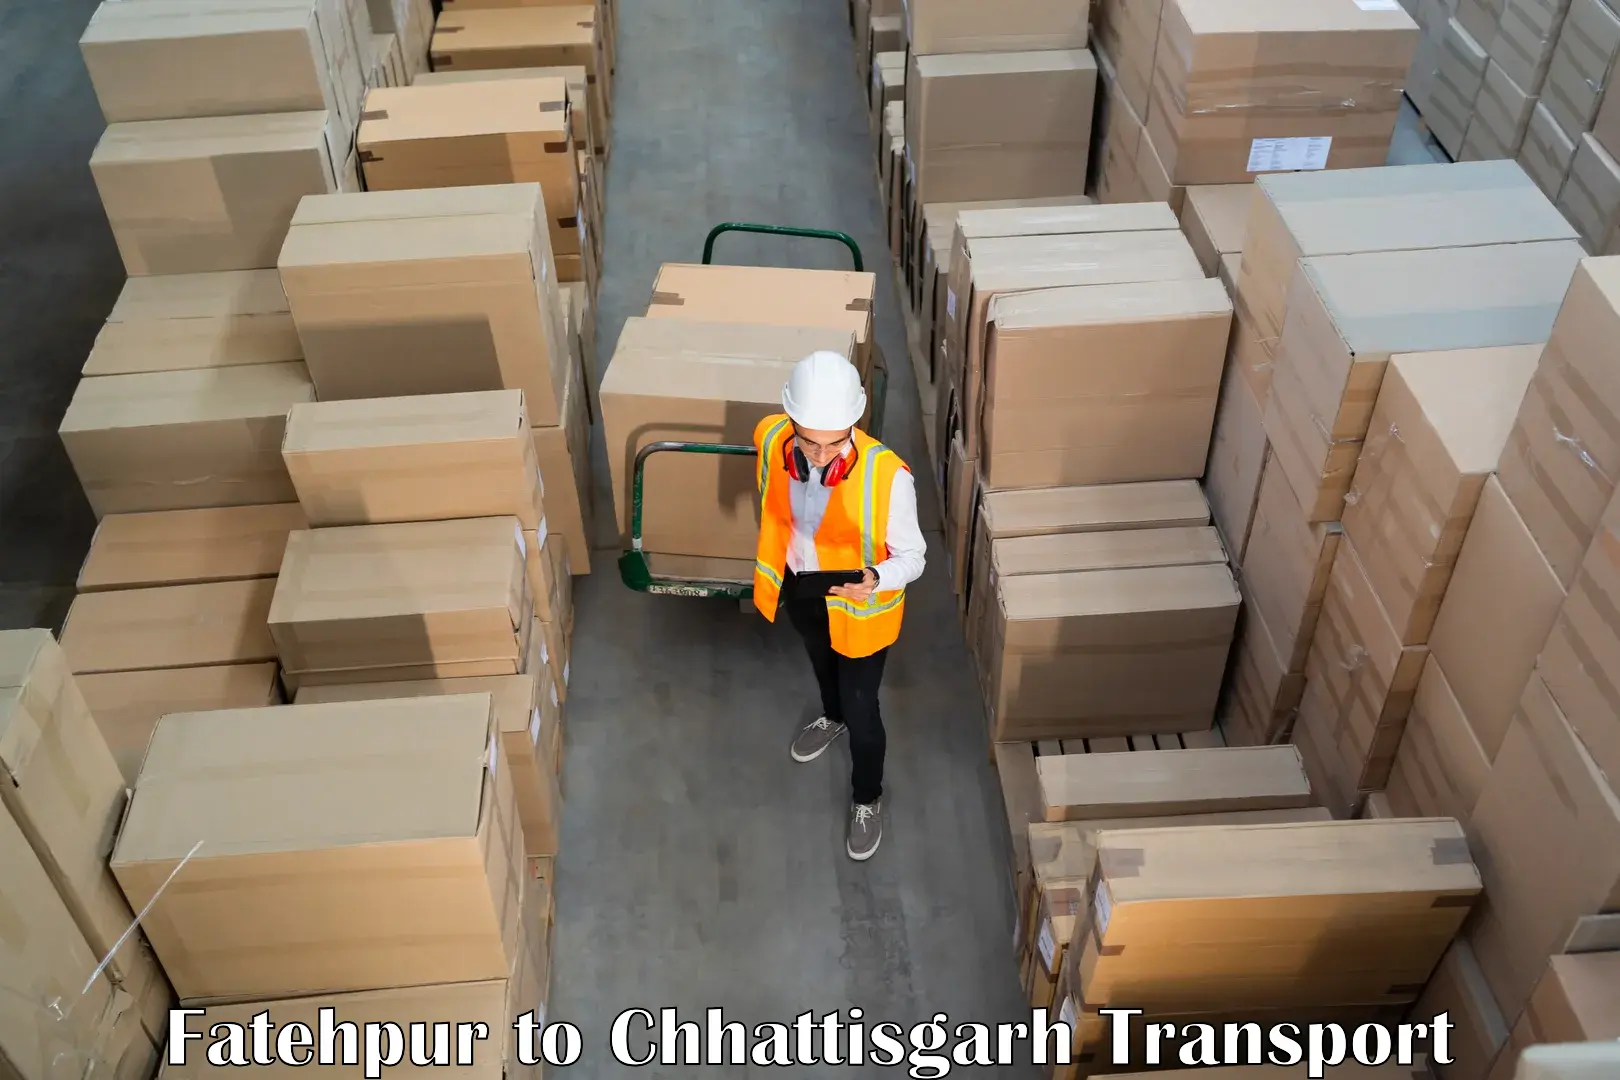 Shipping partner Fatehpur to Chhattisgarh